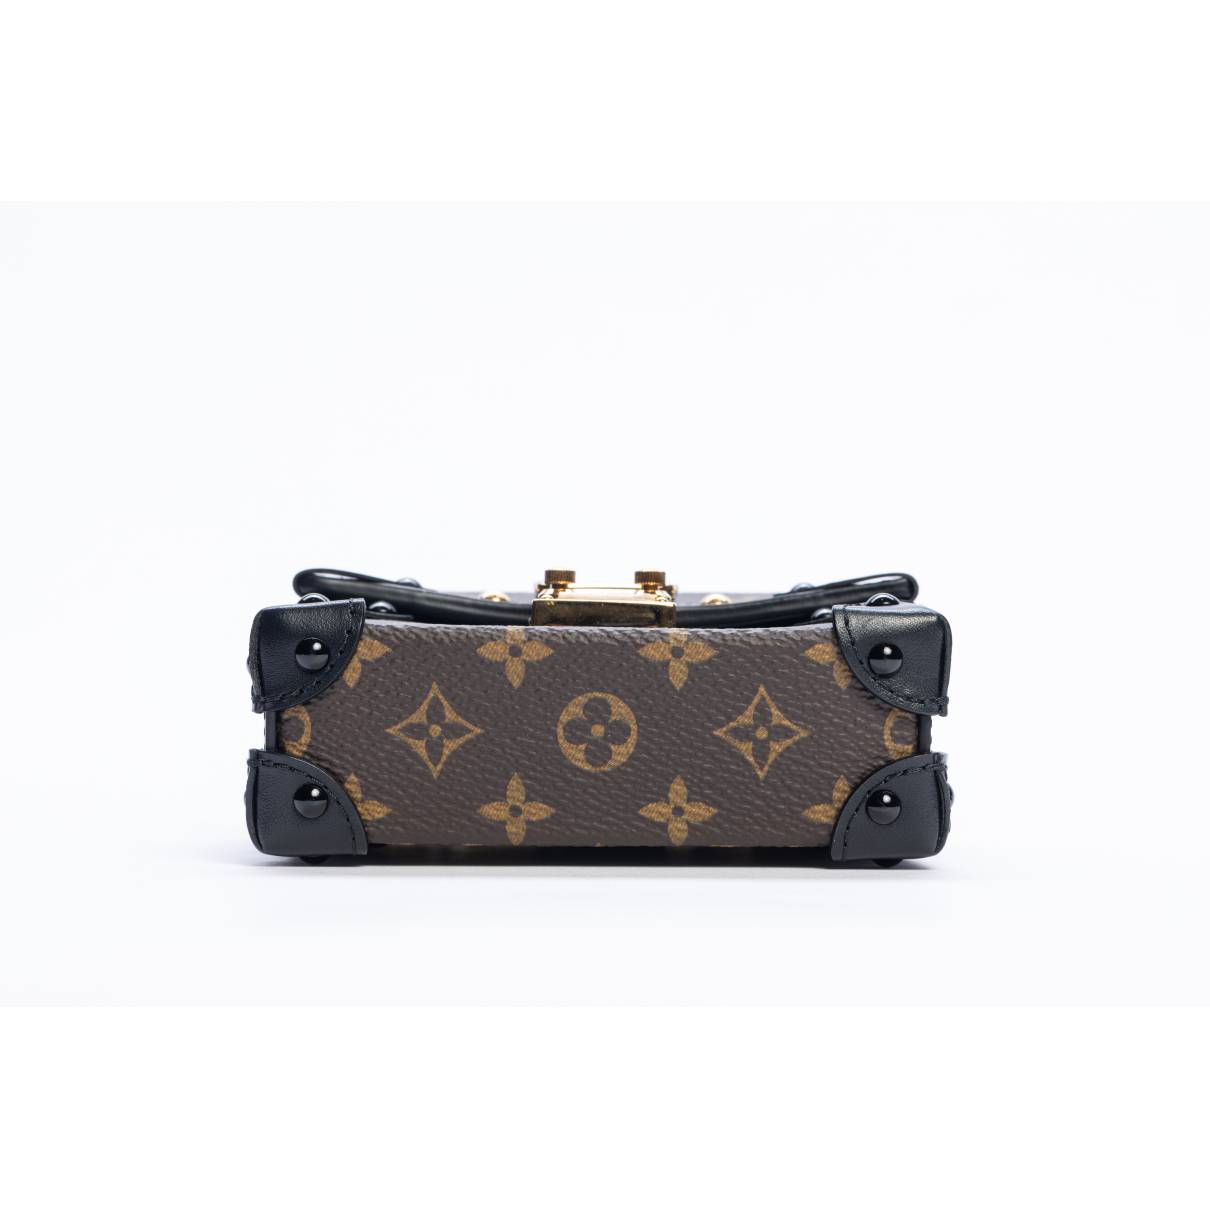 Louis Vuitton Essential Trunk Bag